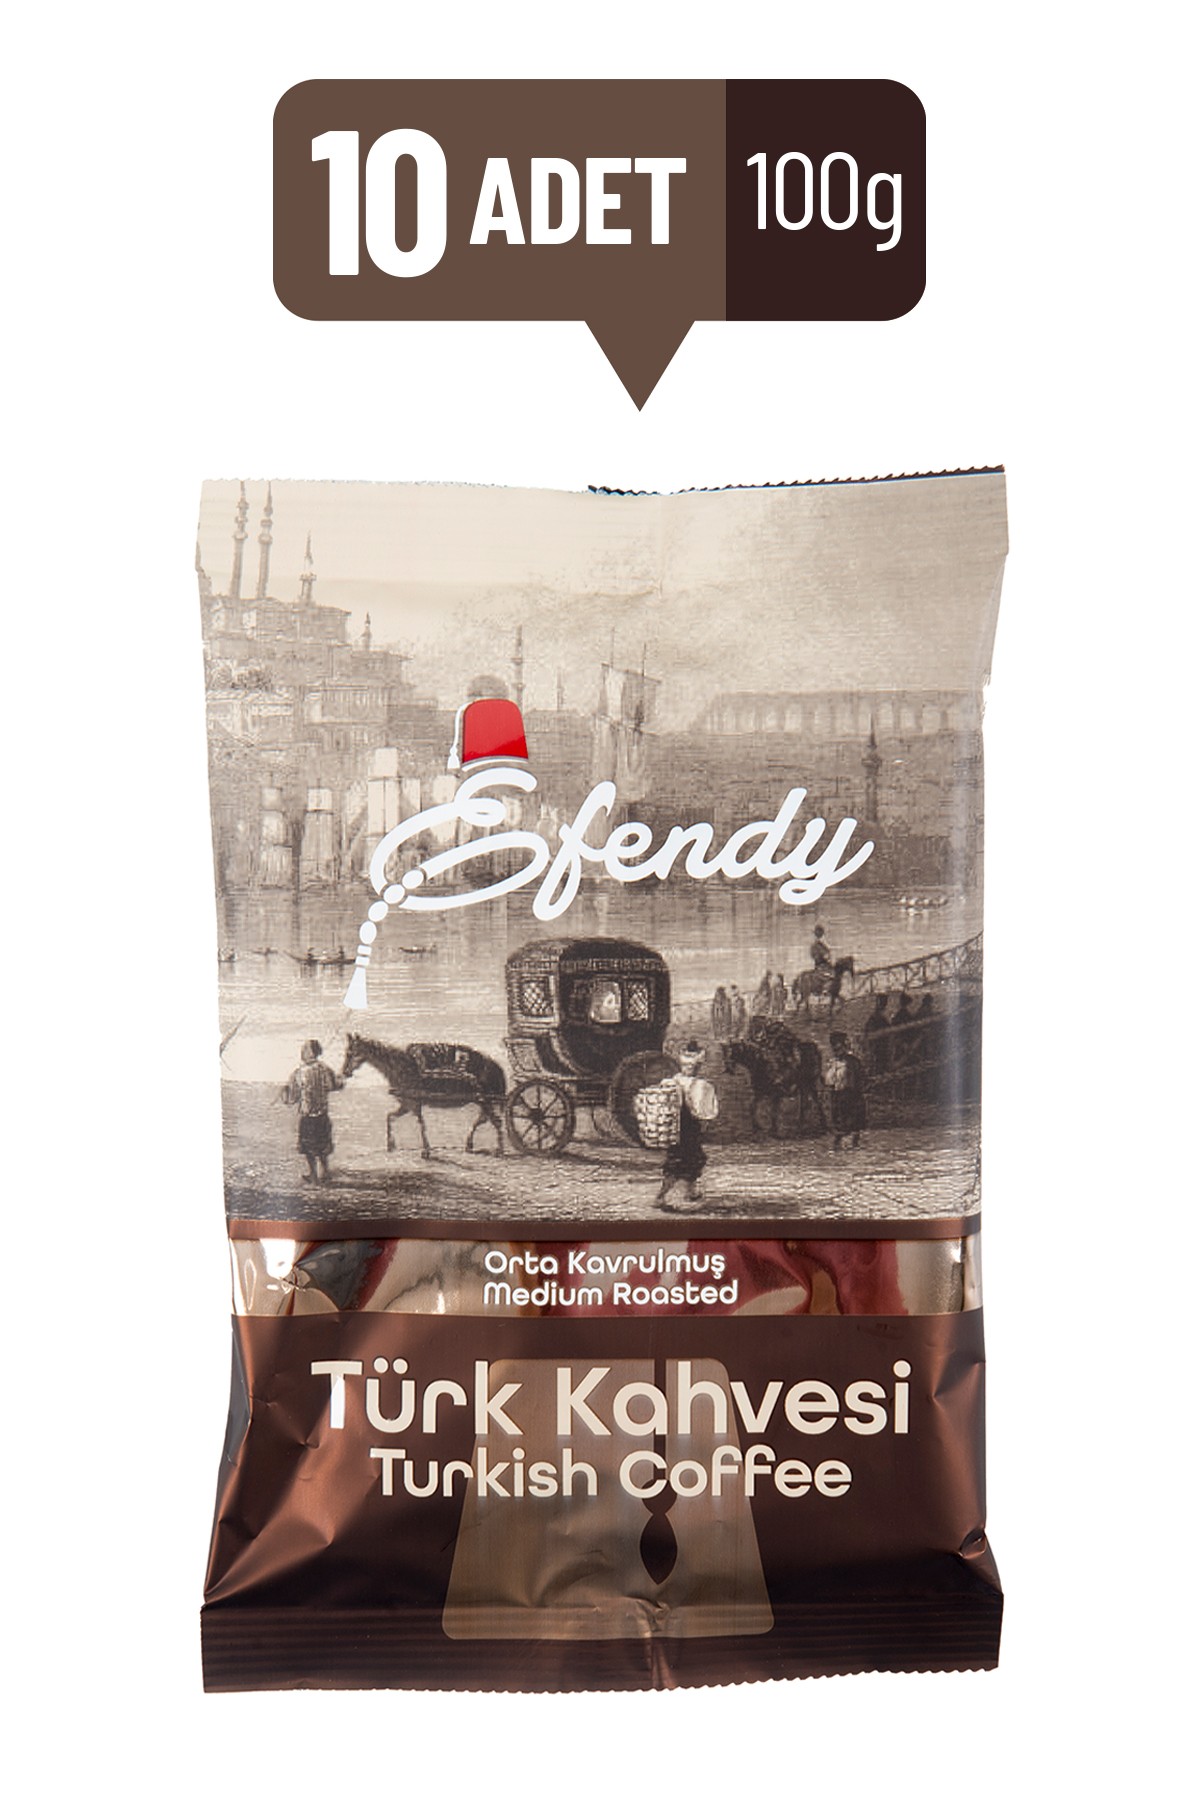 EFENDY Traditional Medium Roasted Turkish Coffee 100g x 10 Pieces